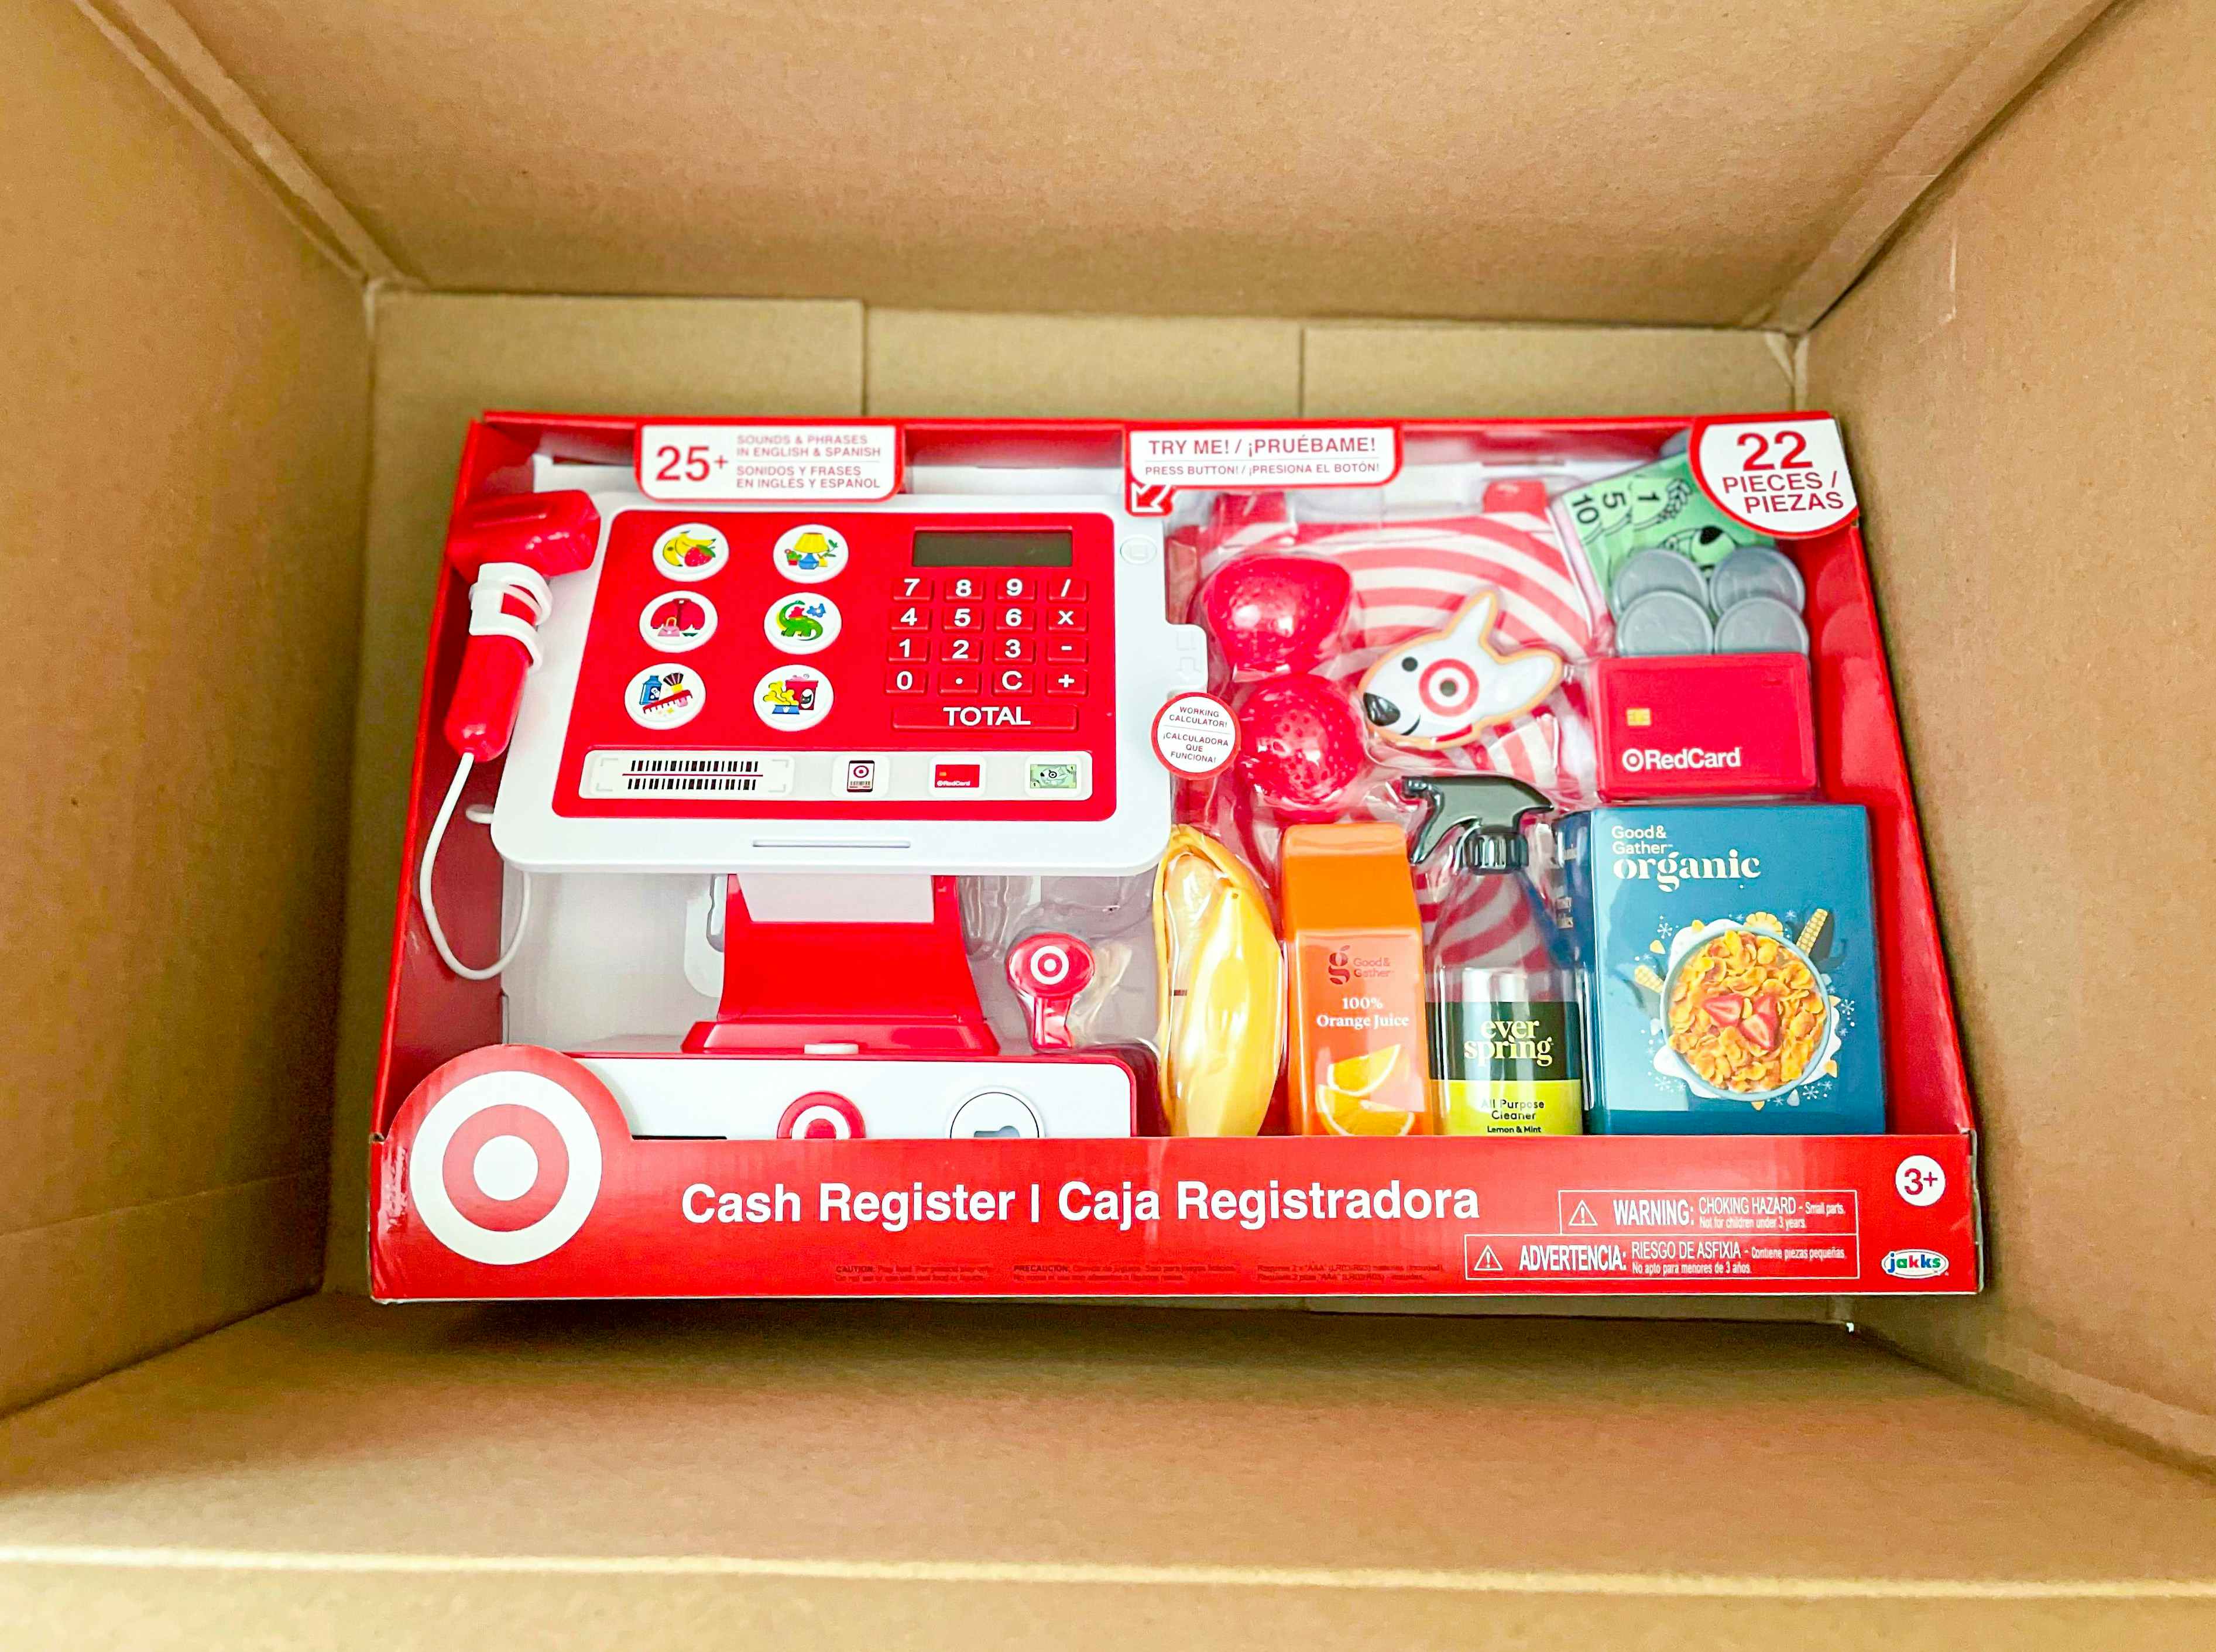 Cash register toy inside a cardboard box